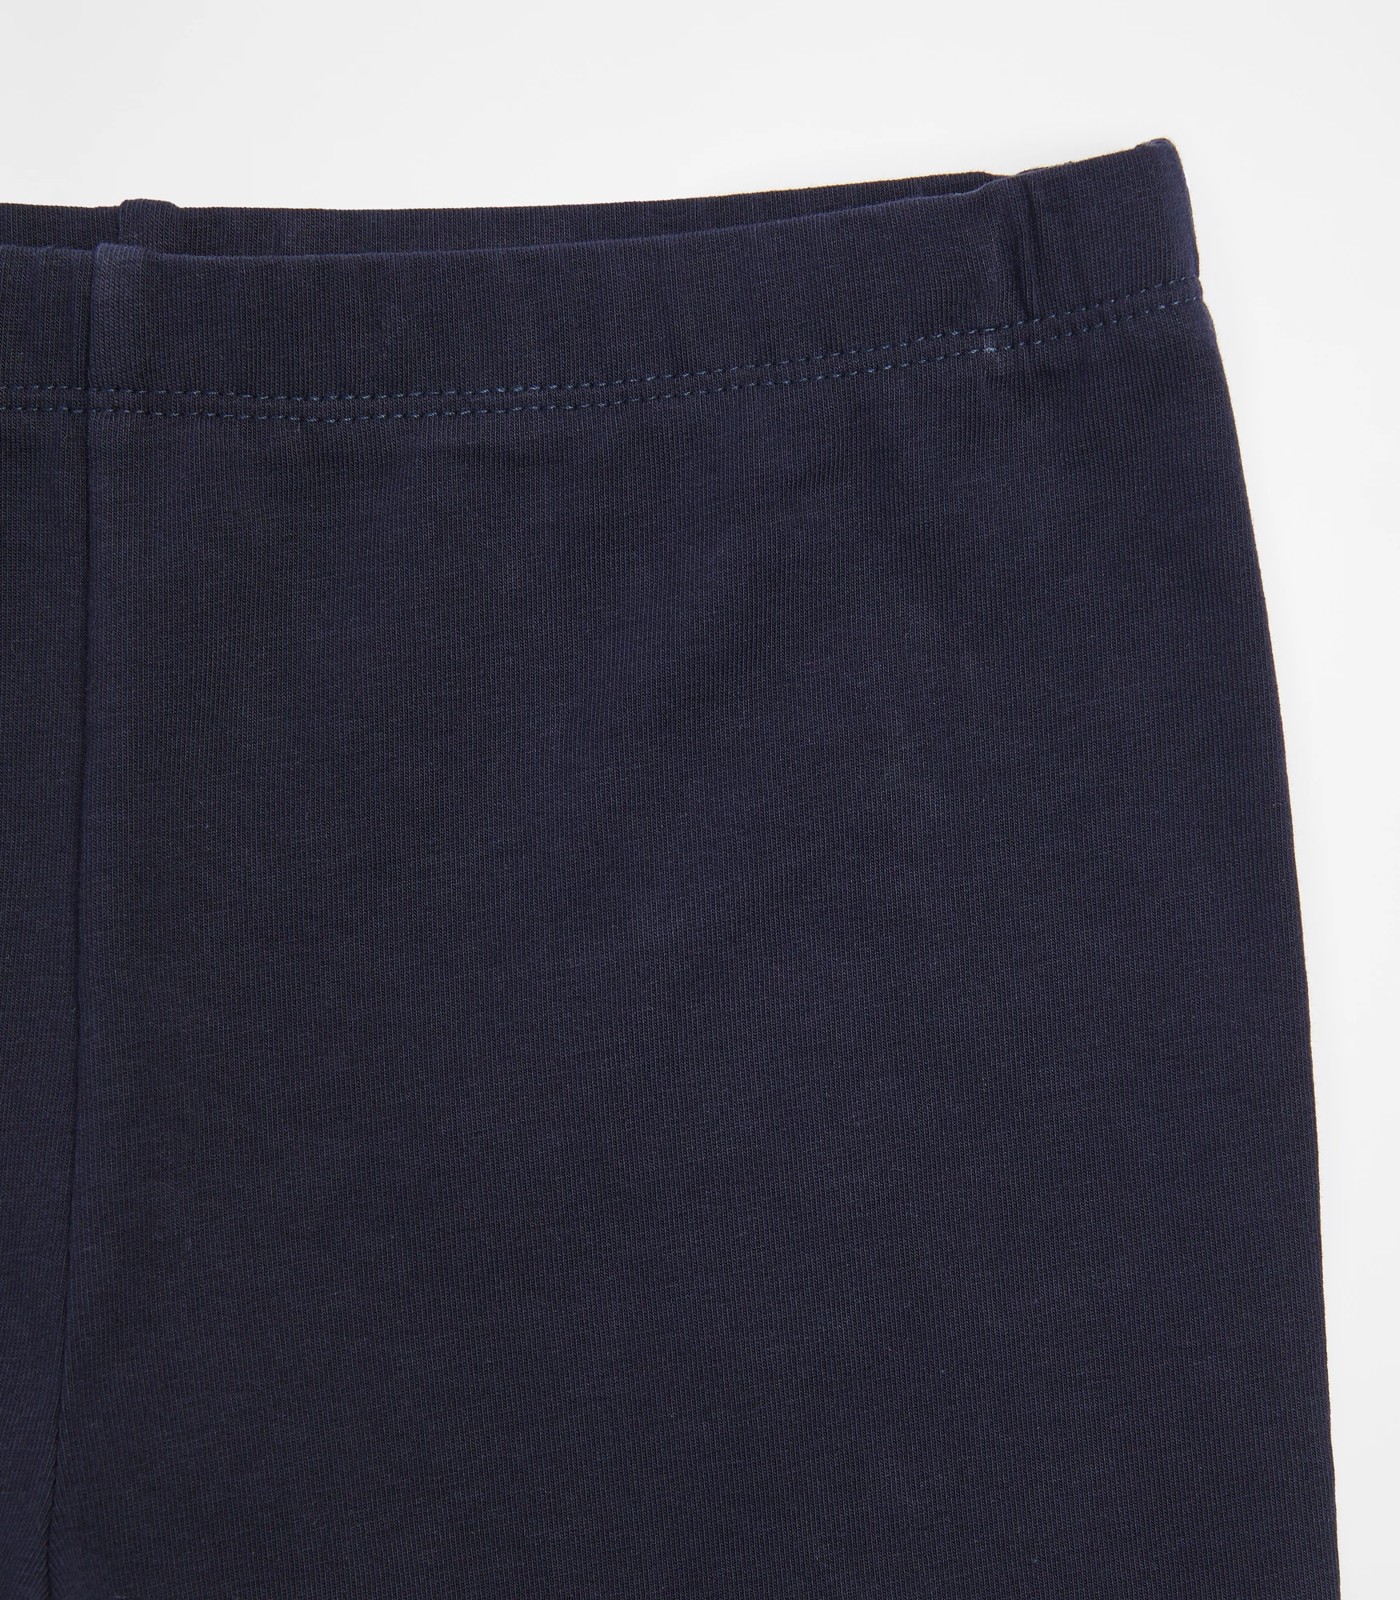 Bike Shorts - Short Length - Navy Blue | Target Australia